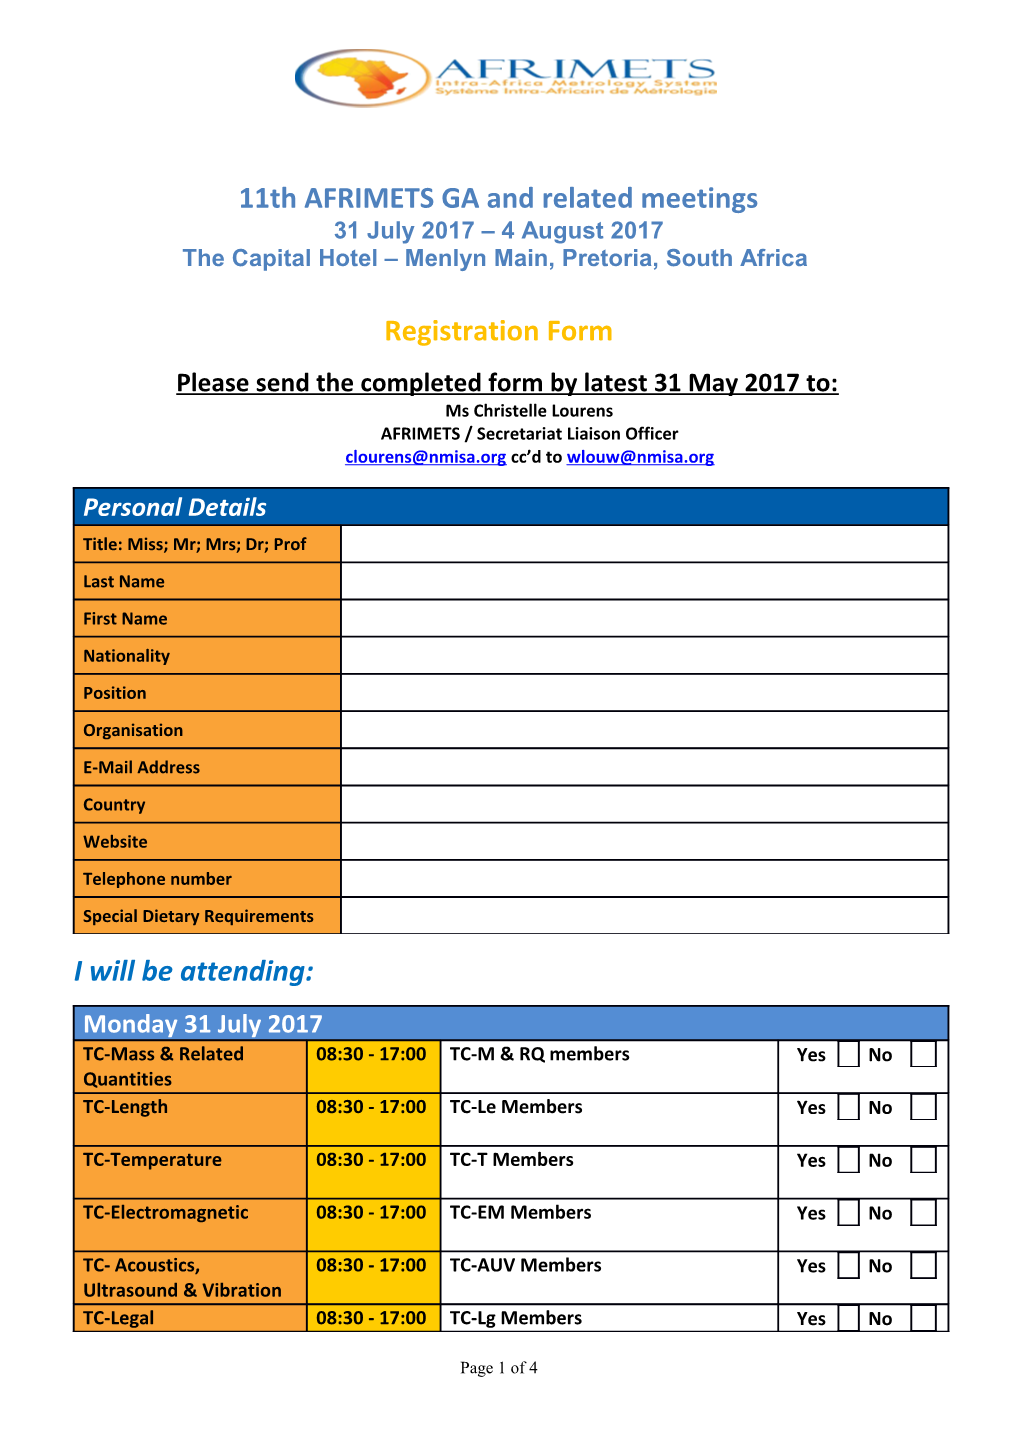 JCRB / AFRIMETS Meetings Tentative Programme